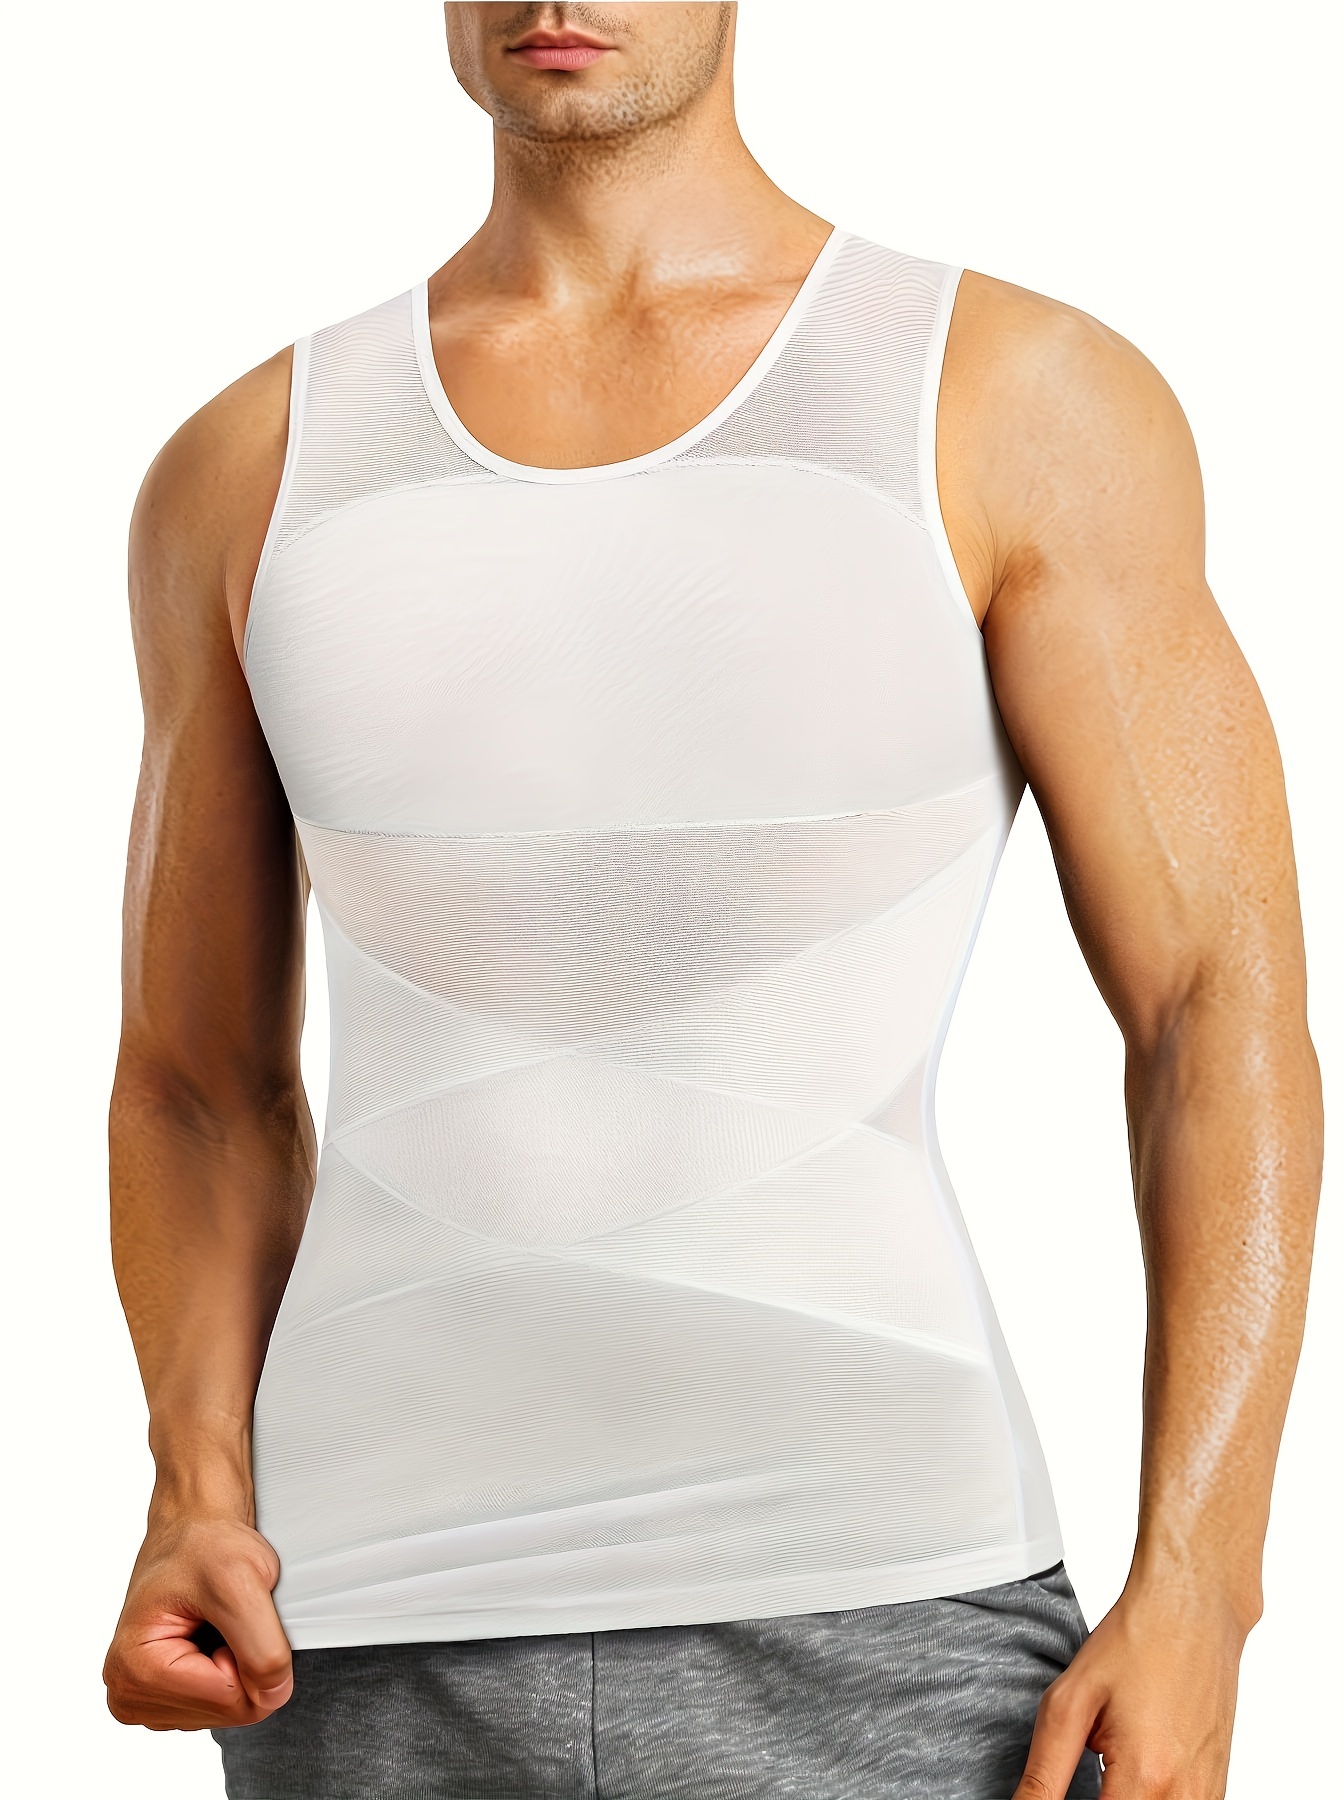 Gynecomastia Compression Vest Fajas para Hombres Back Support